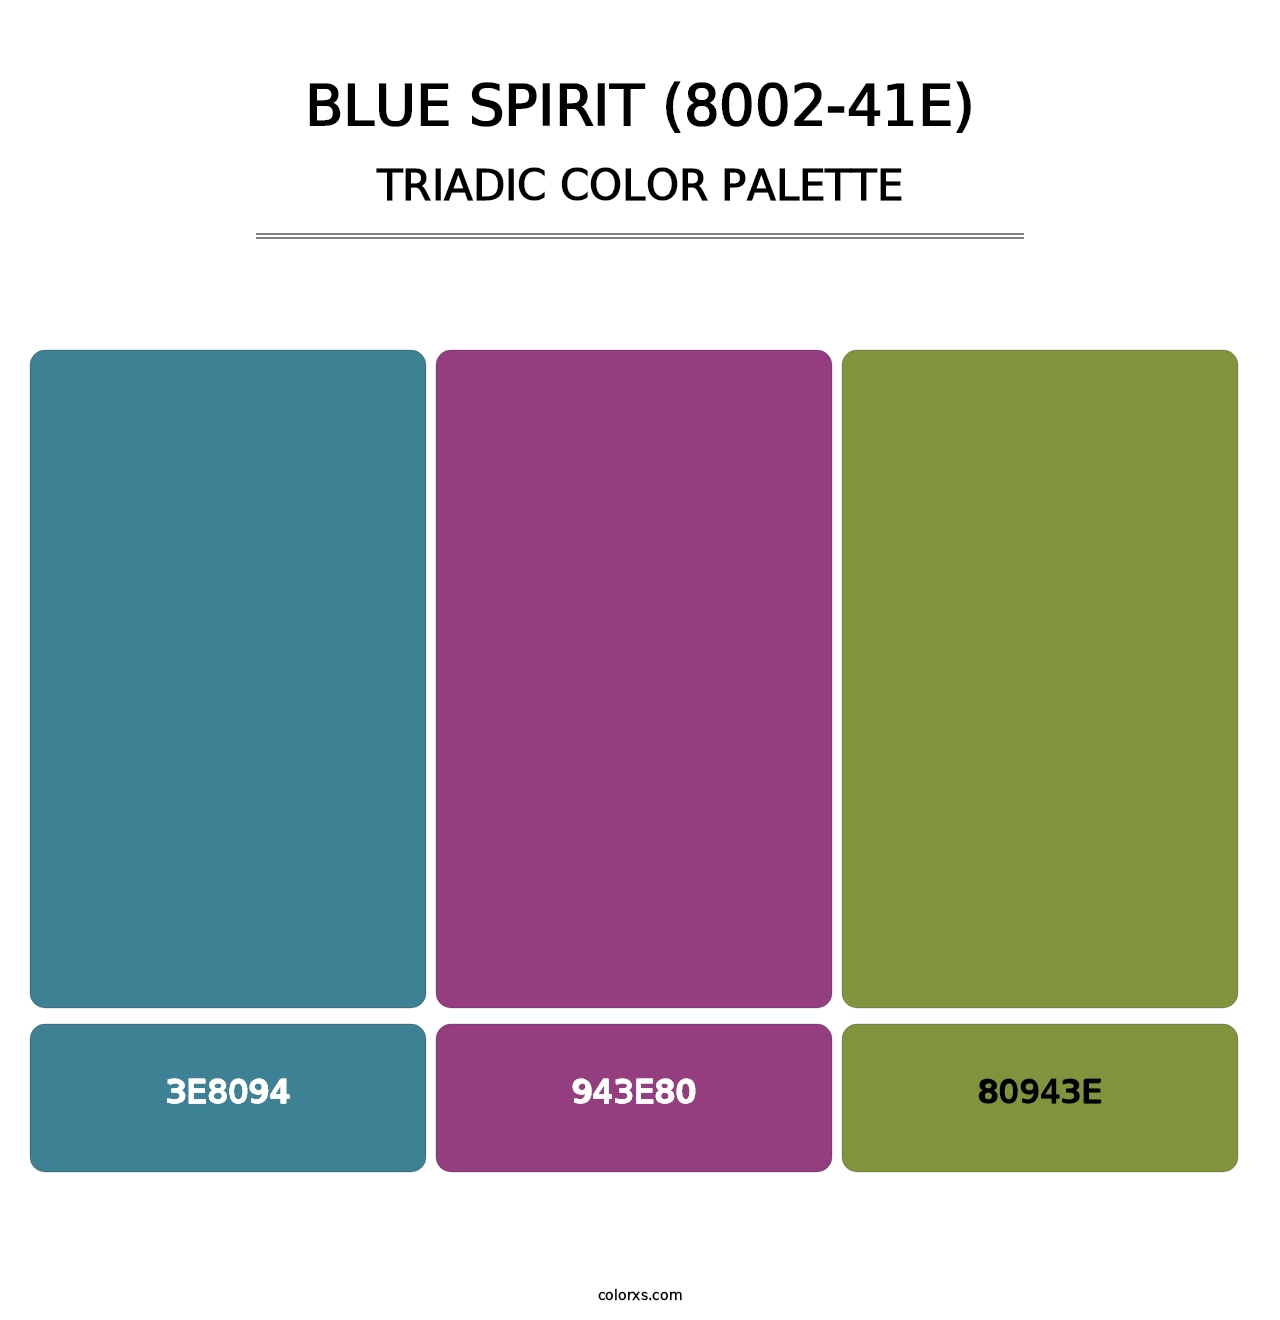 Blue Spirit (8002-41E) - Triadic Color Palette